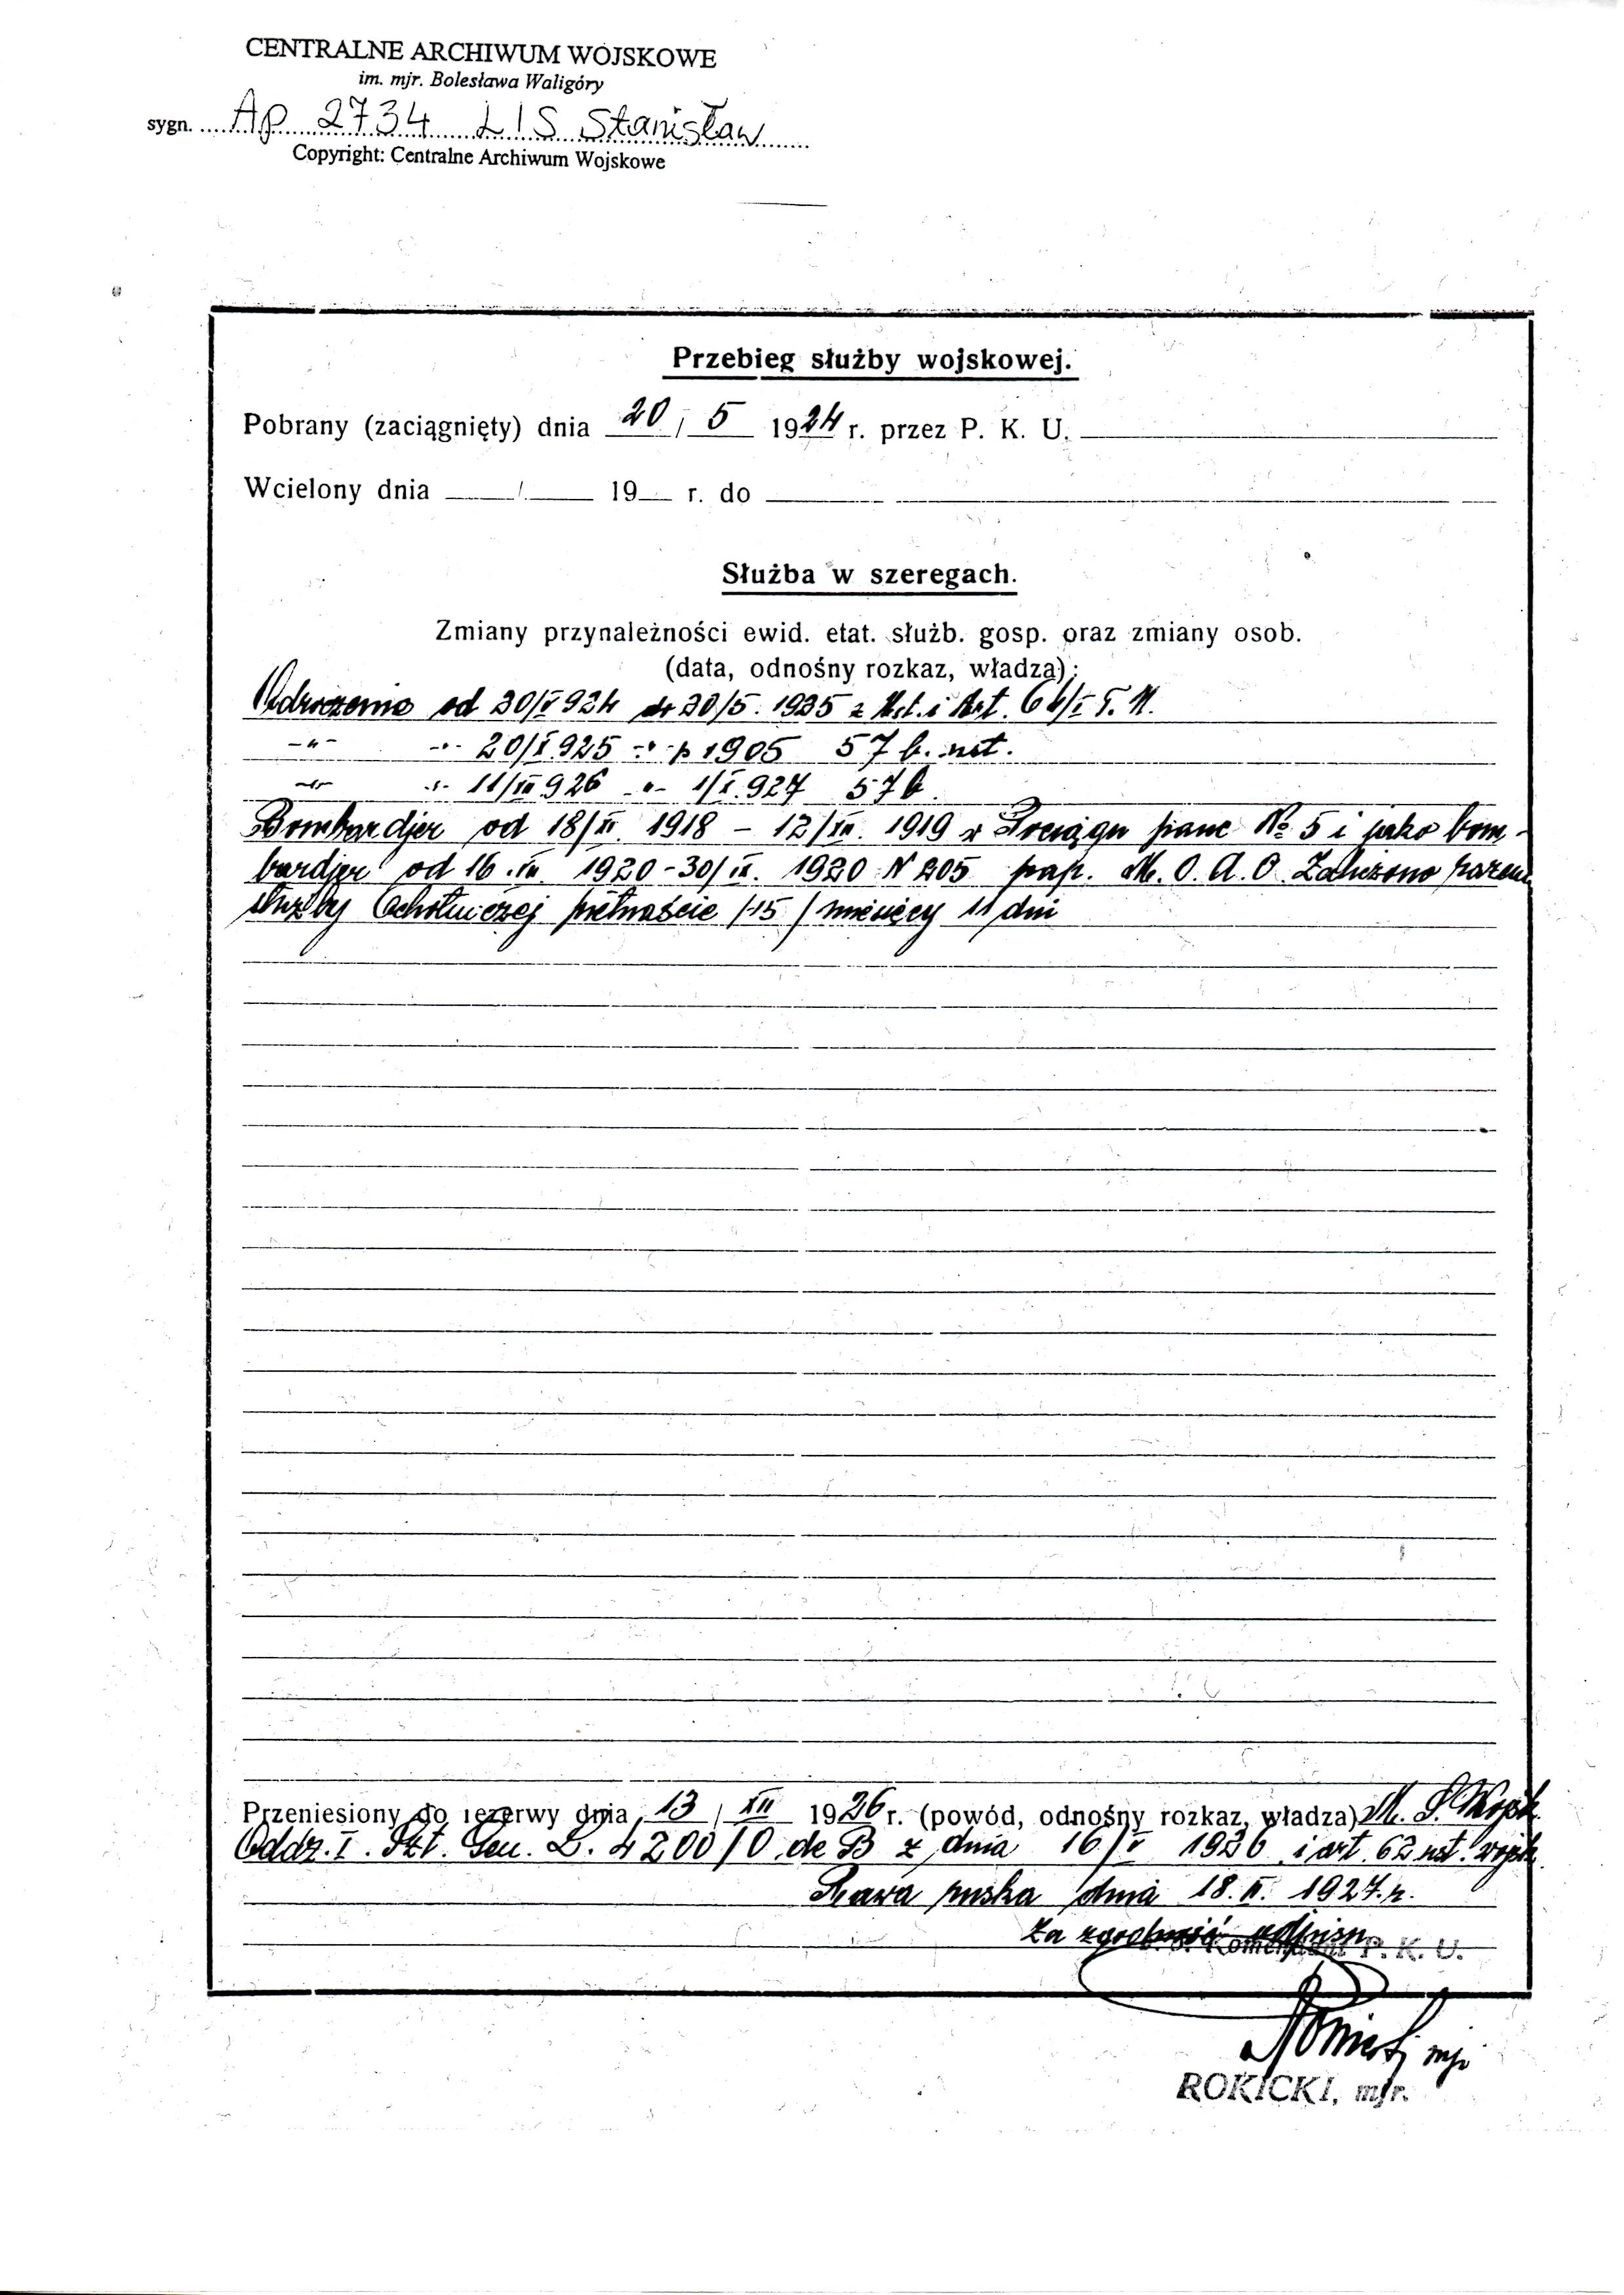 Stanislaw Lis handwritten Document RECORD Rawa ruska 1925 Page 3.jpg